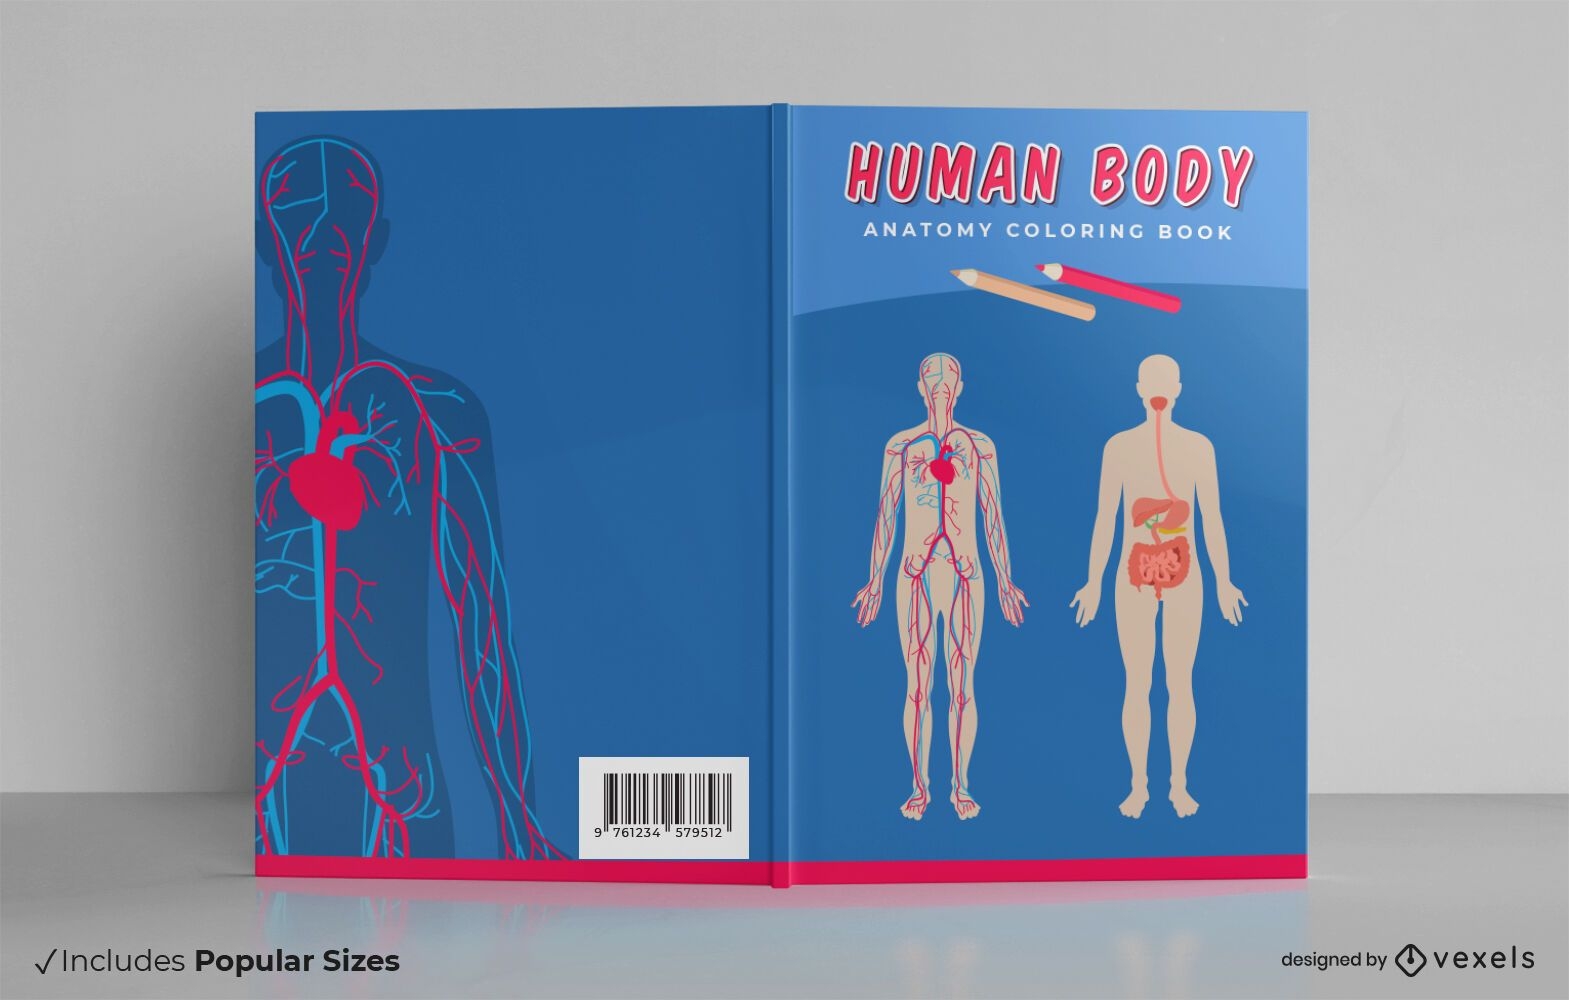 Design de capa de livro de corpo humano